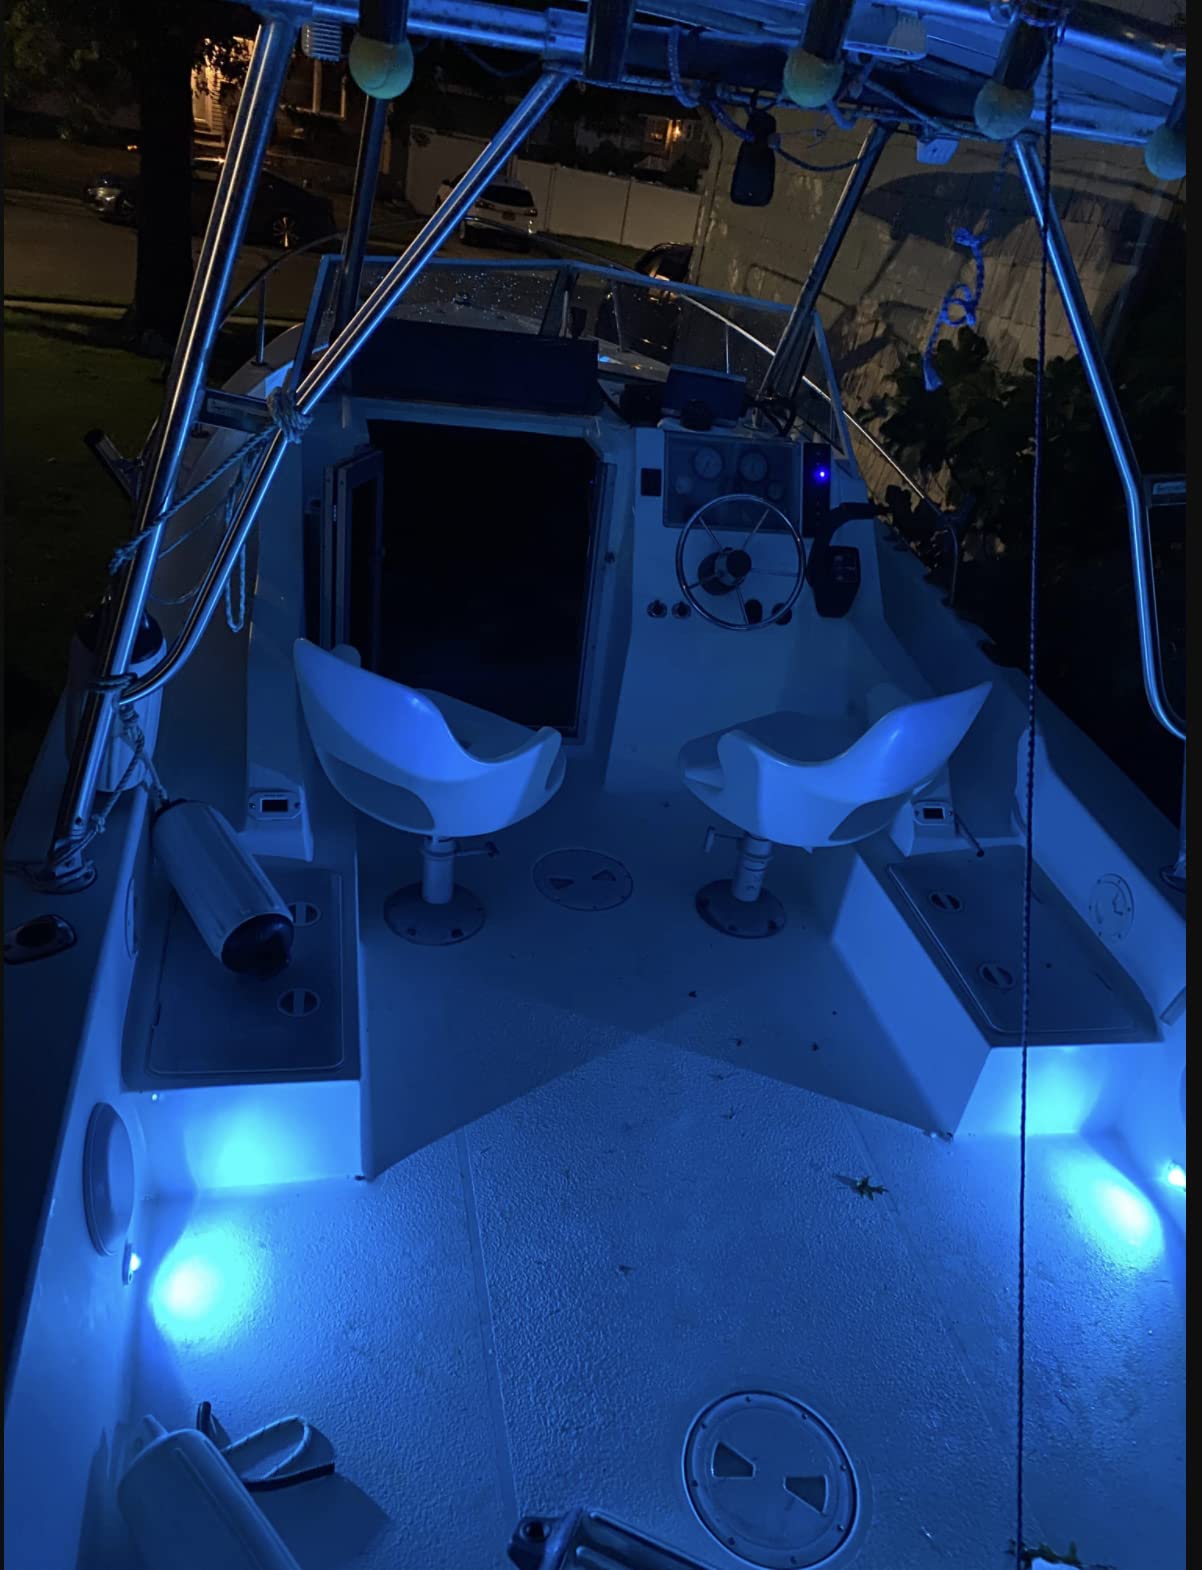 Black Oak LED Marine LED Boat light Marine Accent Lights – Fishing Lights, Courtesy Lights, Deck Lights Dimmable Blue Lights – Boat Lighting for Fishing, Pontoon, Kayak,Yacht, Sailboat (1 Pack)